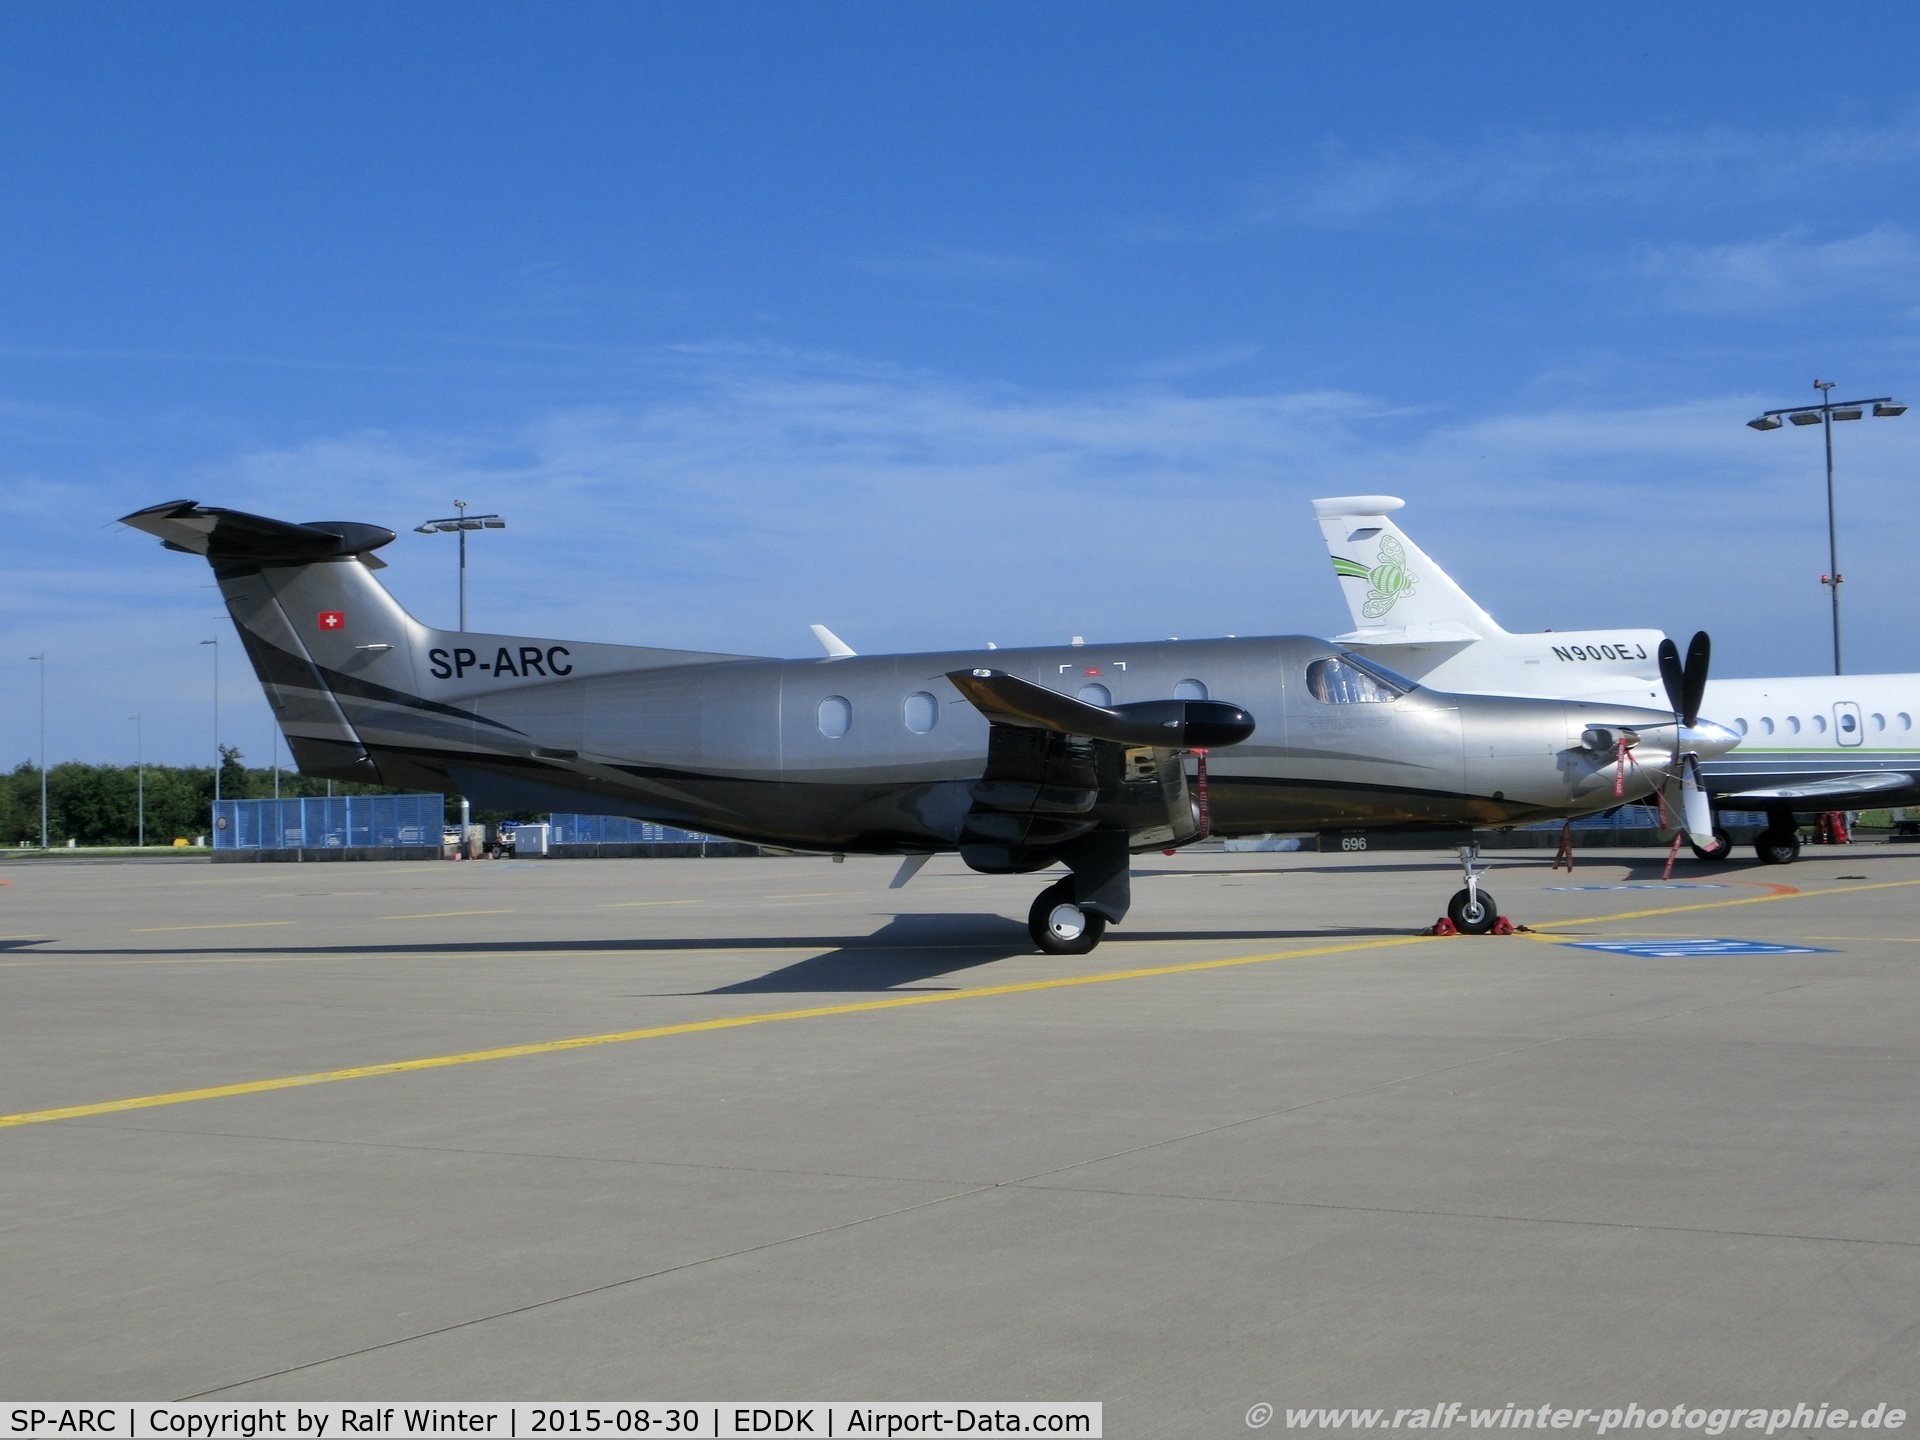 SP-ARC, 2006 Pilatus PC-12/47 C/N 696, Pilatus PC-12-47 - Big Star Ltd Sp zoo - 696 - SP-ARC - 30.08.2015 - CGN